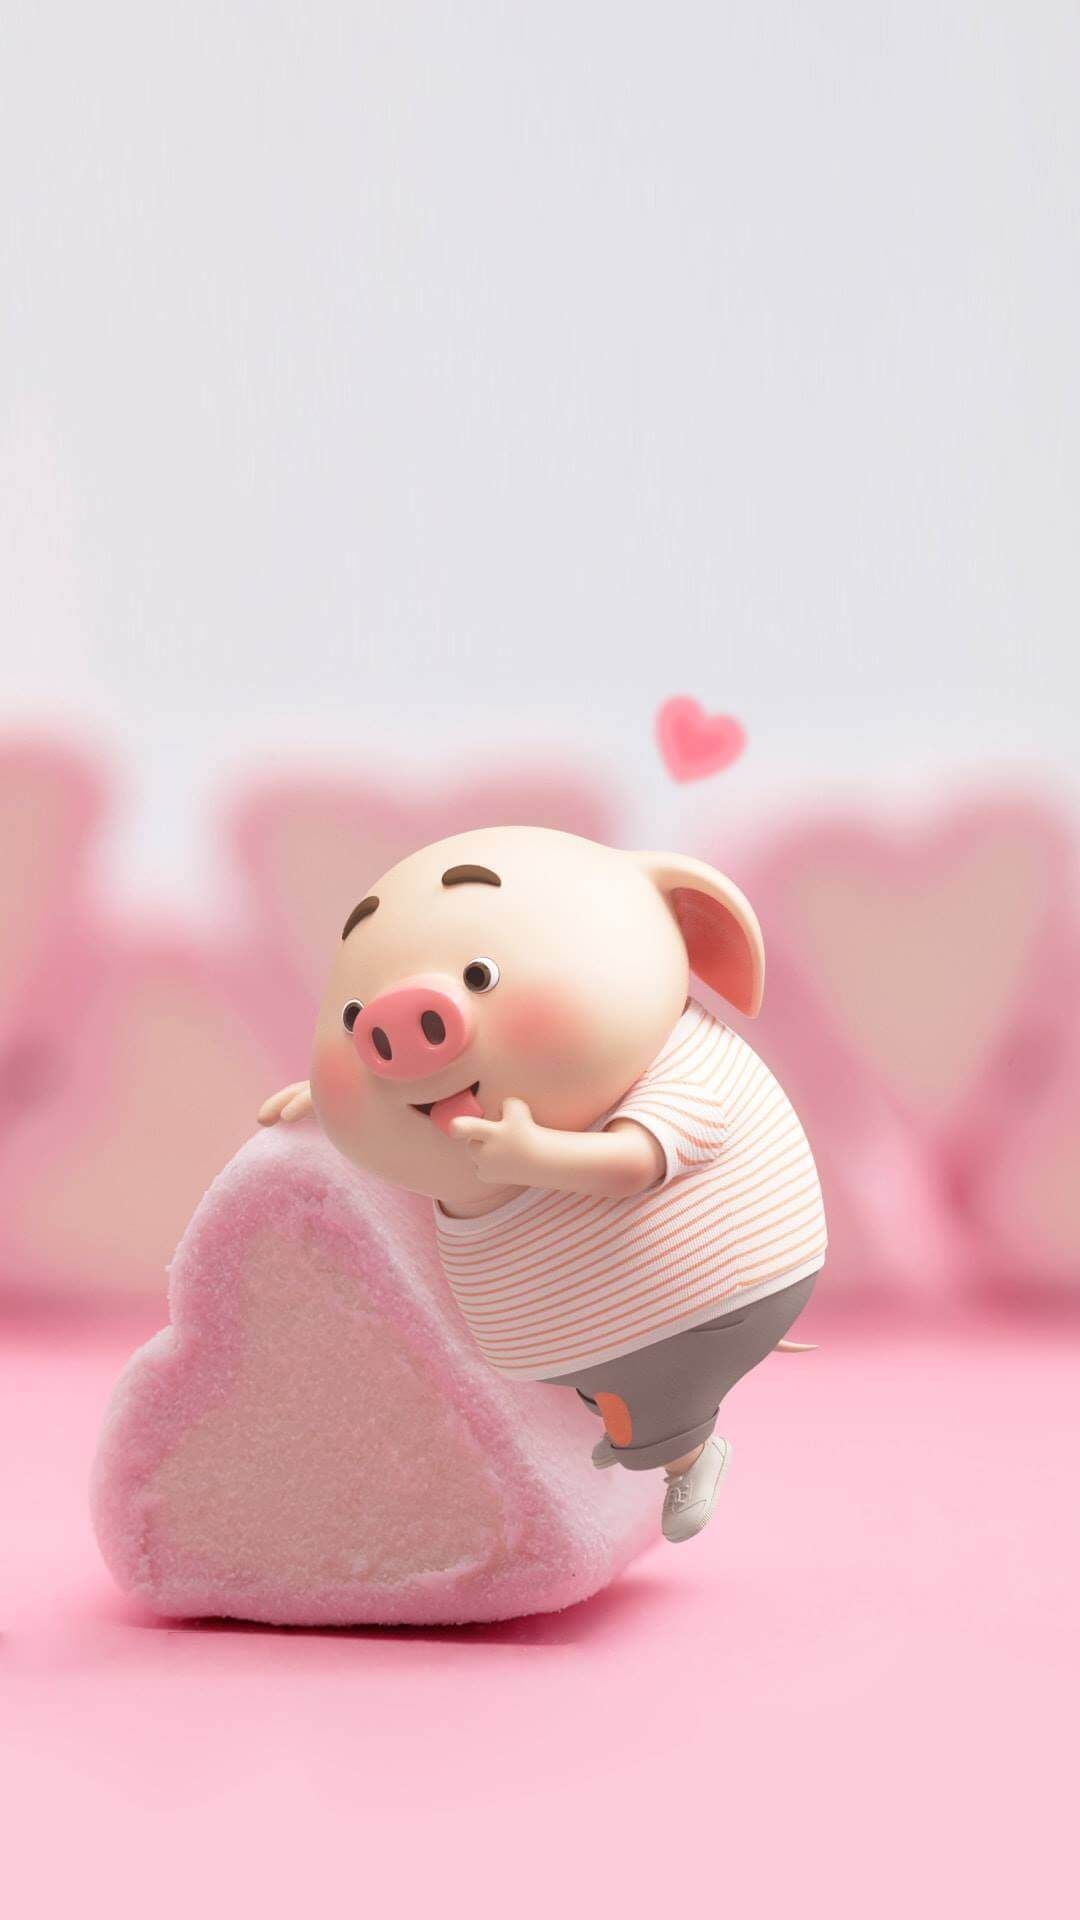 Anime Pig iPhone Wallpaper